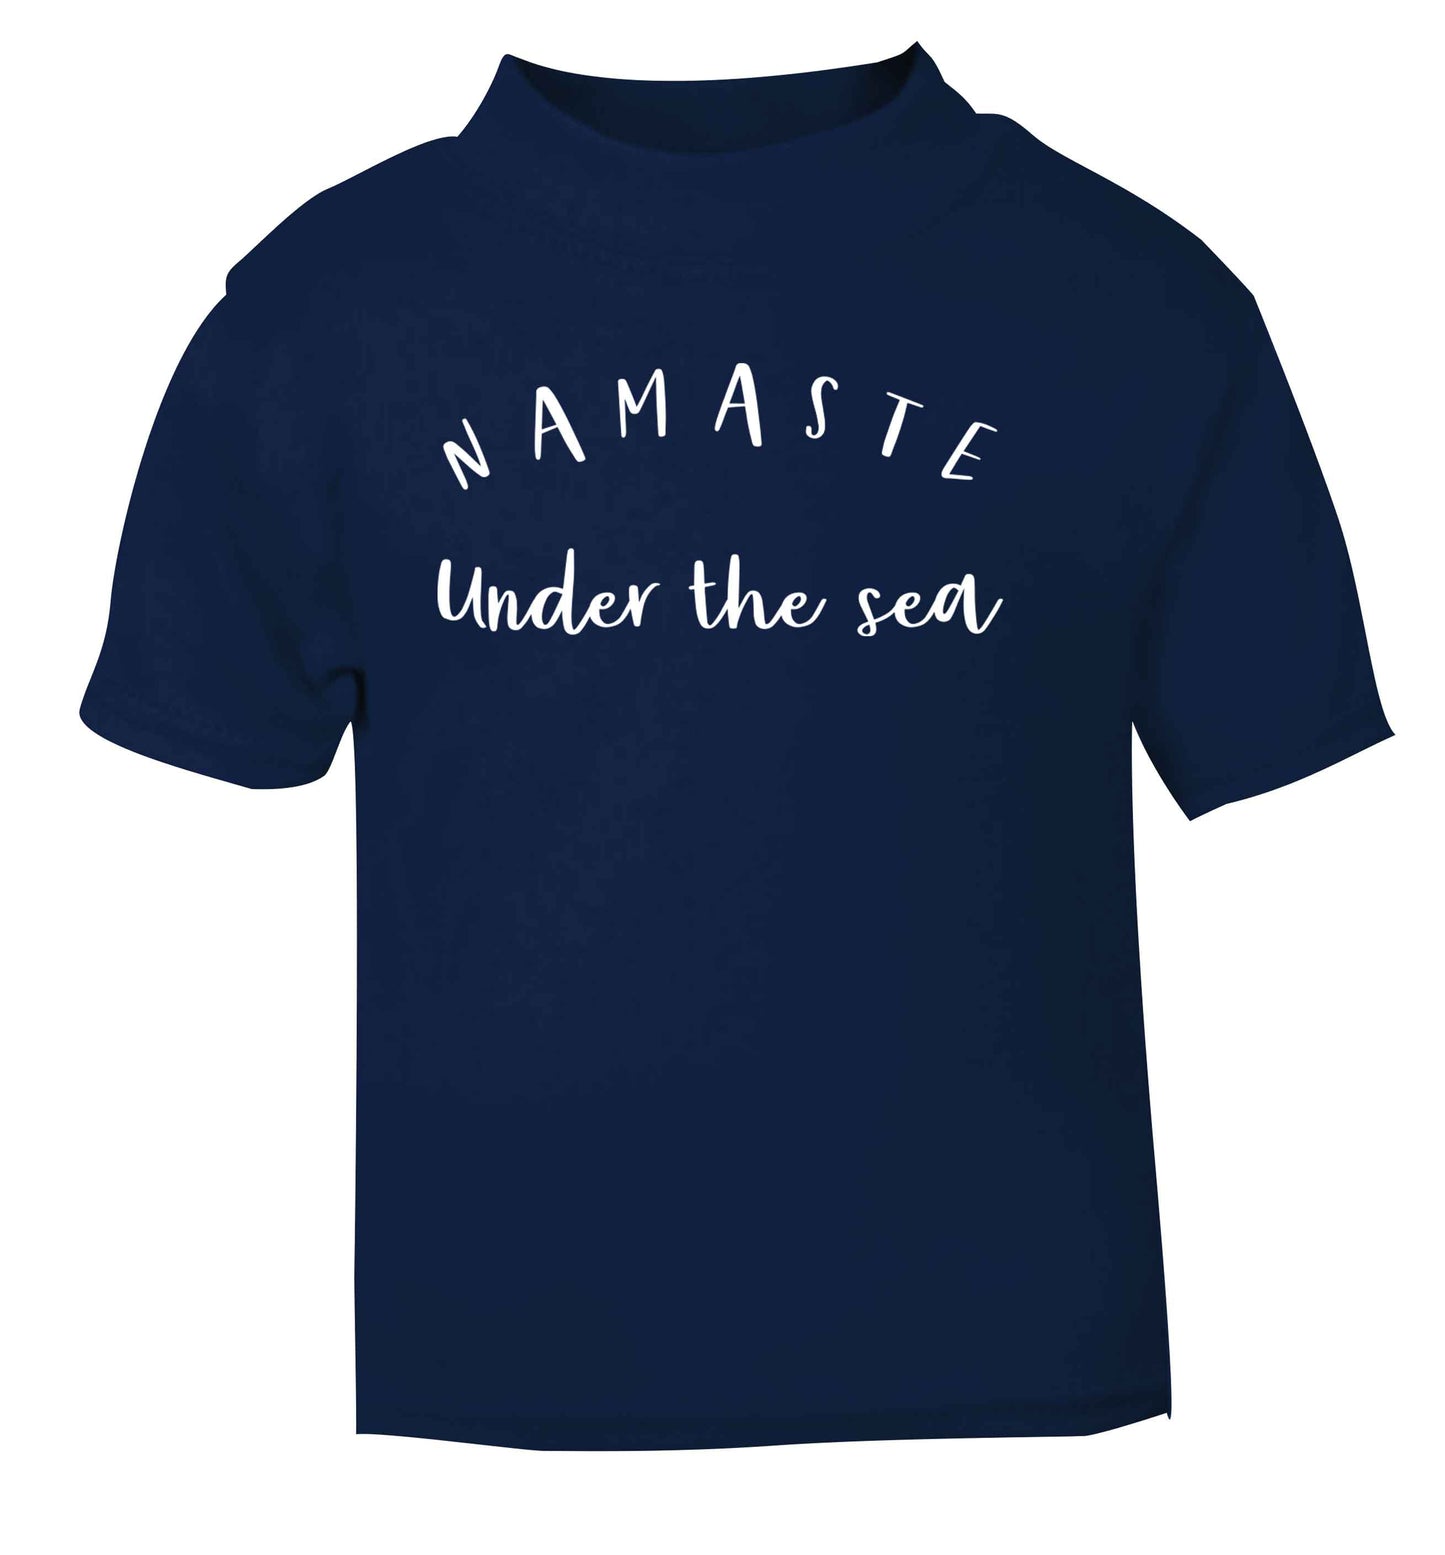 Namaste under the water navy Baby Toddler Tshirt 2 Years